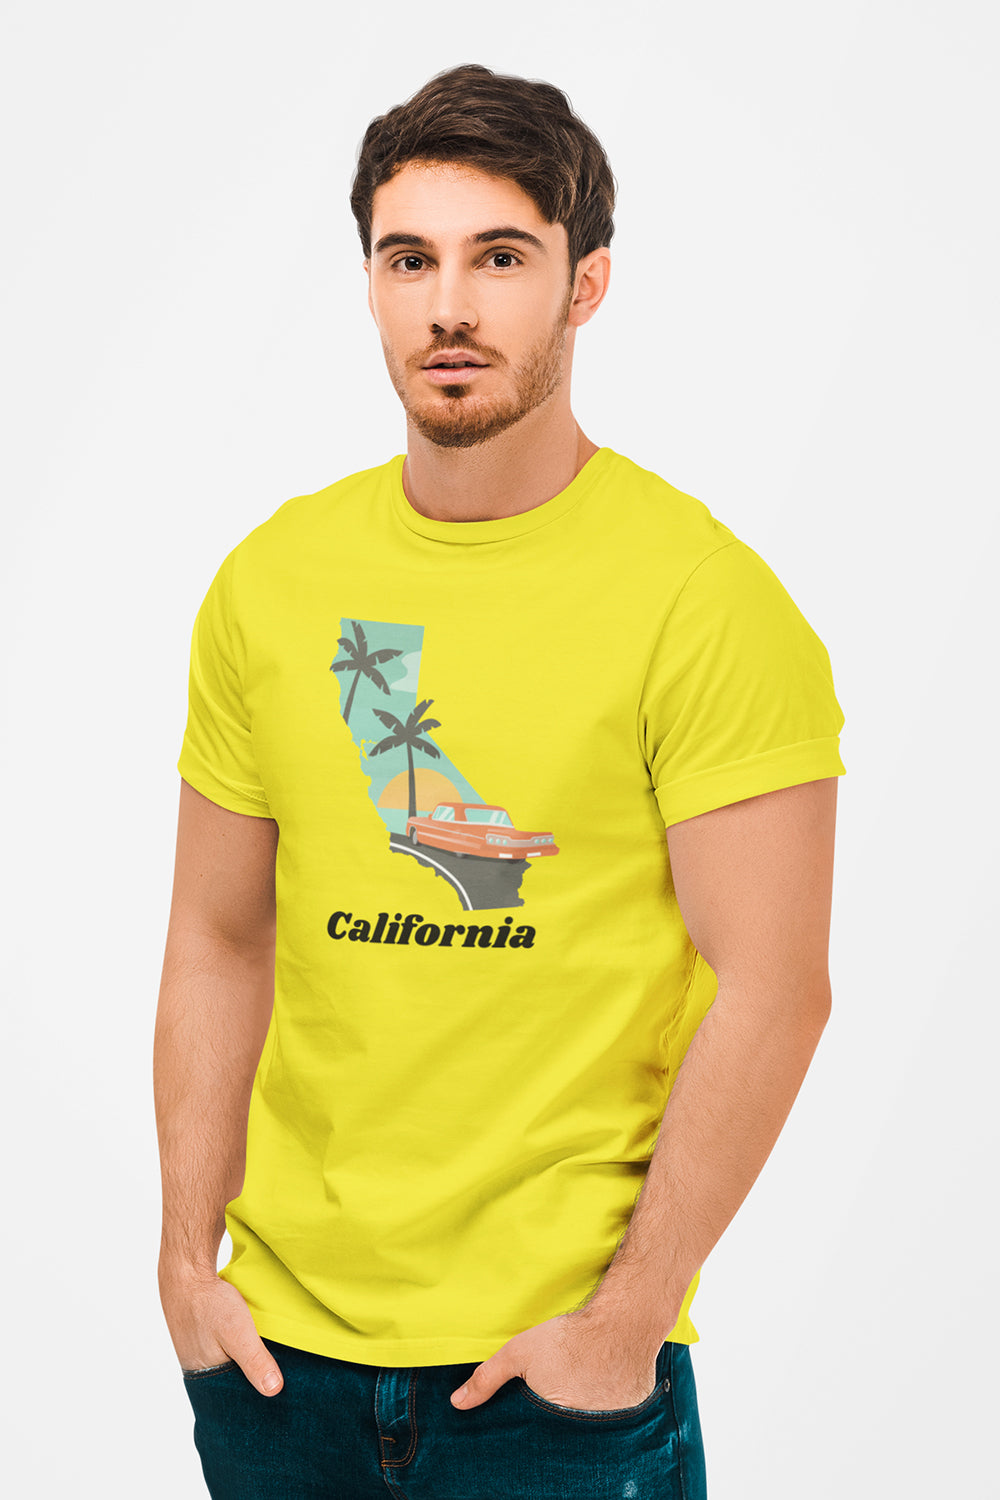 California Graphic Printed Yellow Tshirt